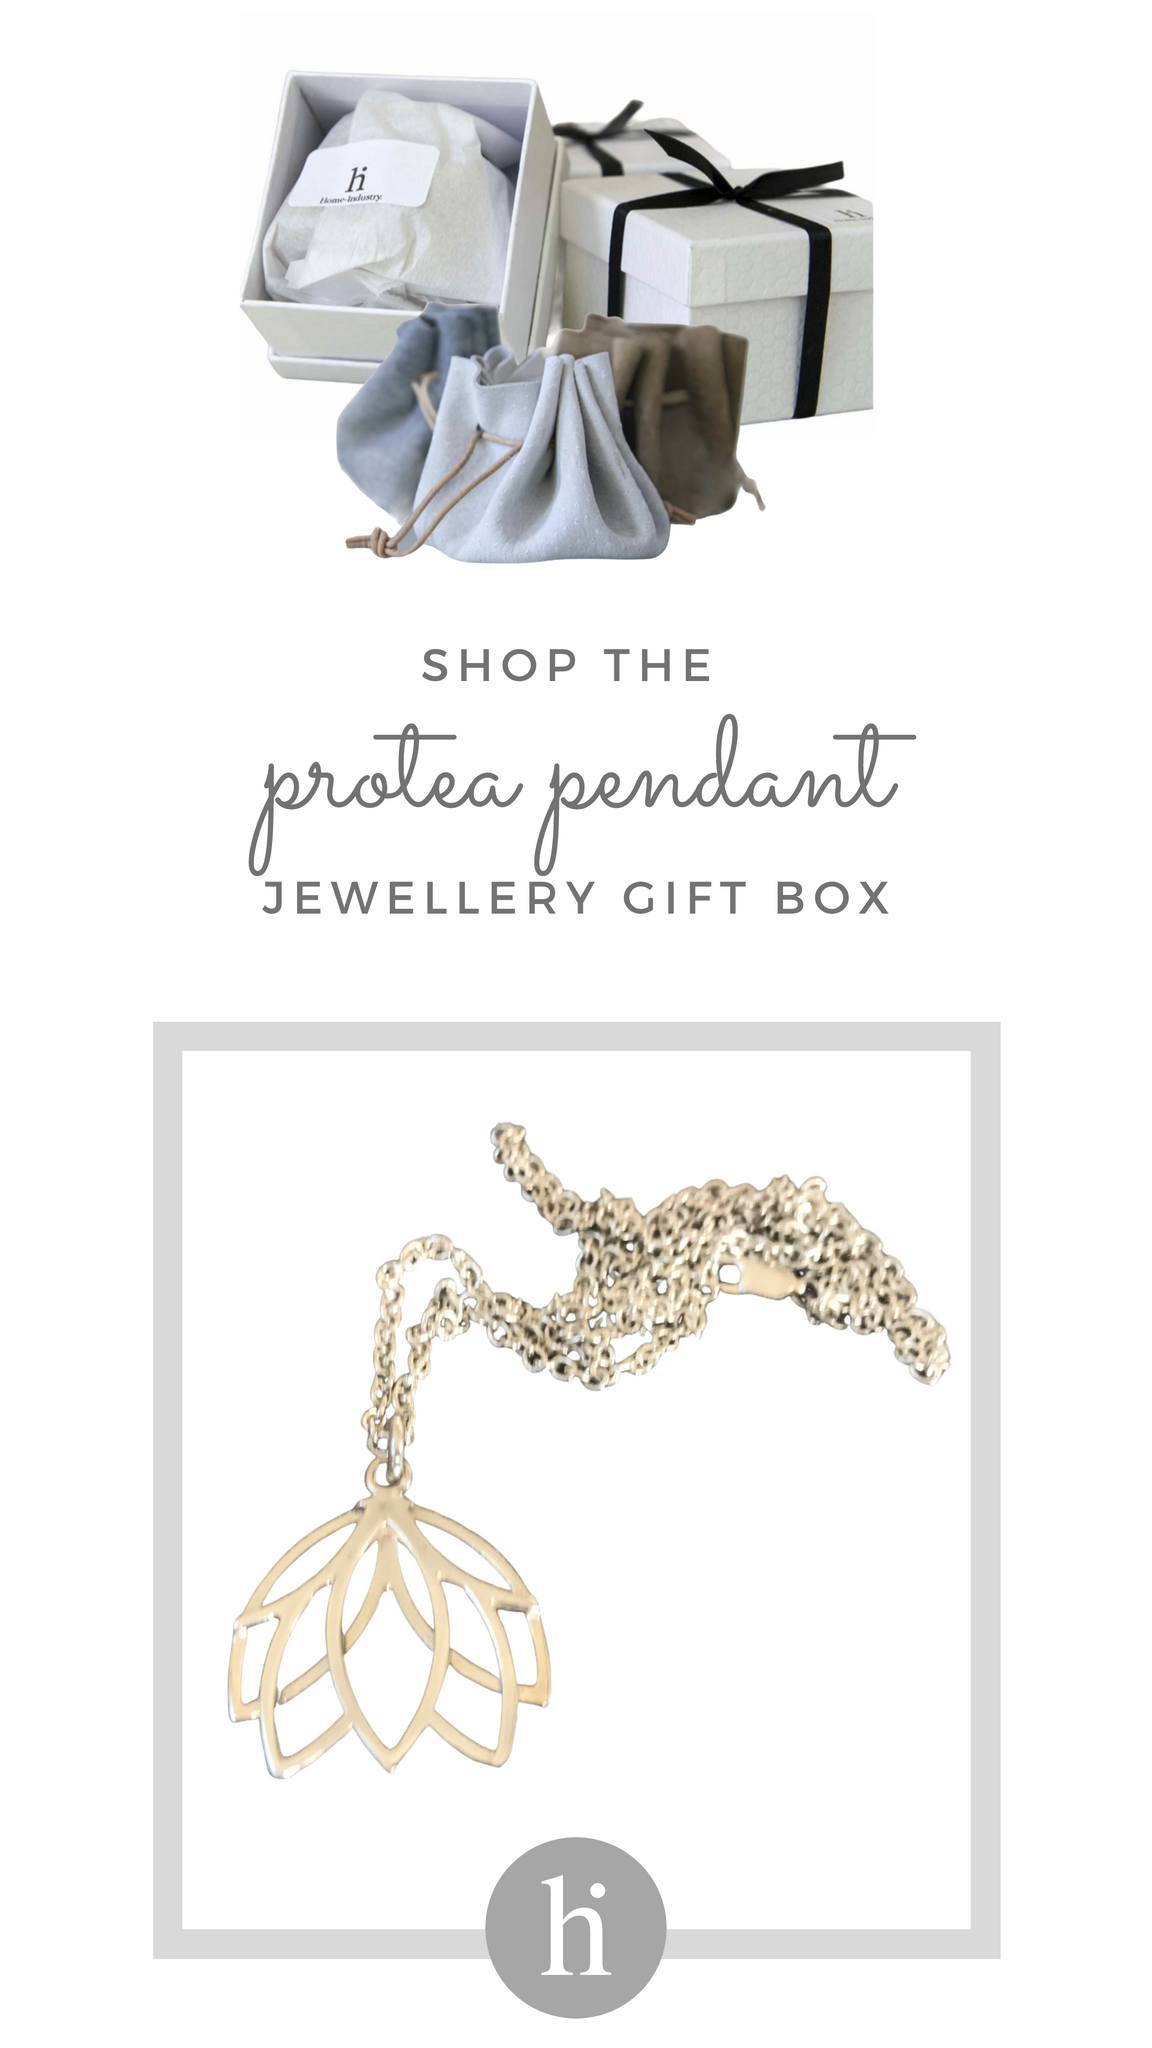 Protea pendant jewellery gift box - with free travel jewellery box